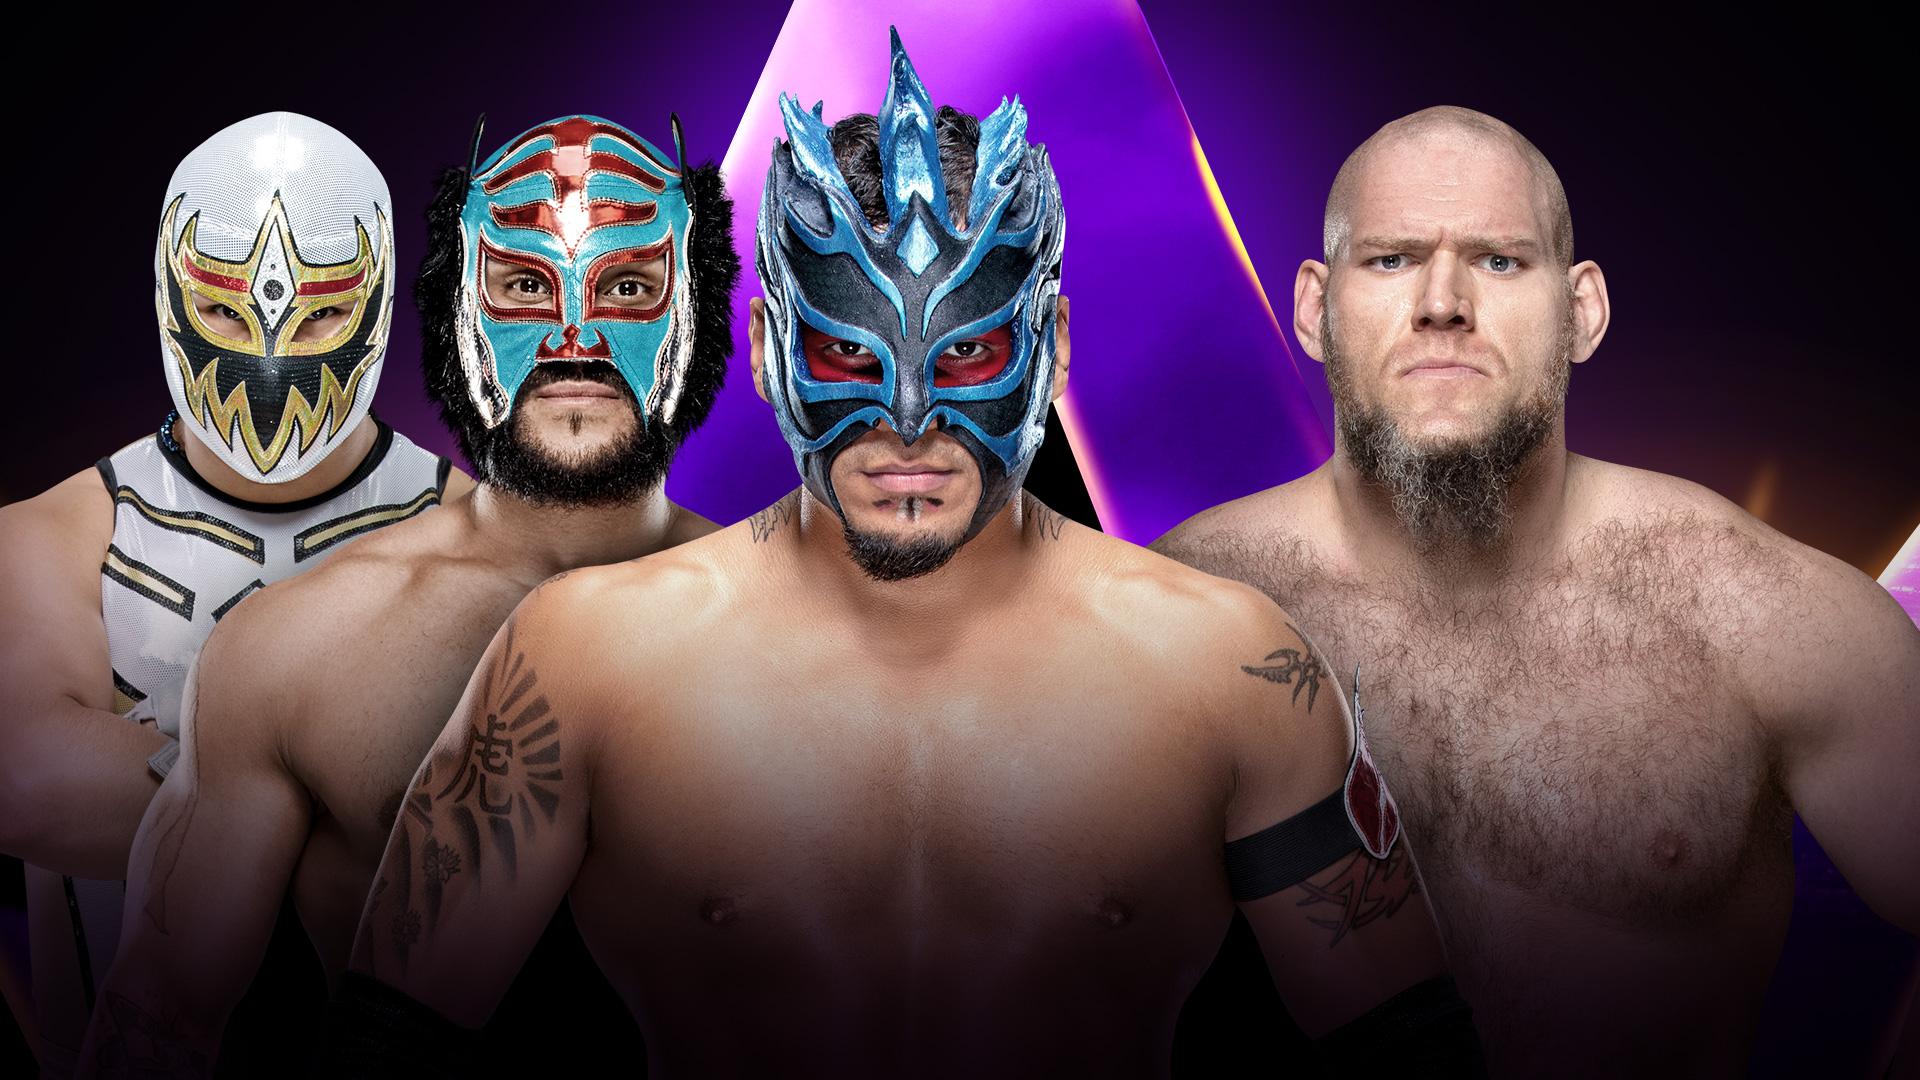 Lars Sullivan vs. Lucha House Party Announced for WWE Super